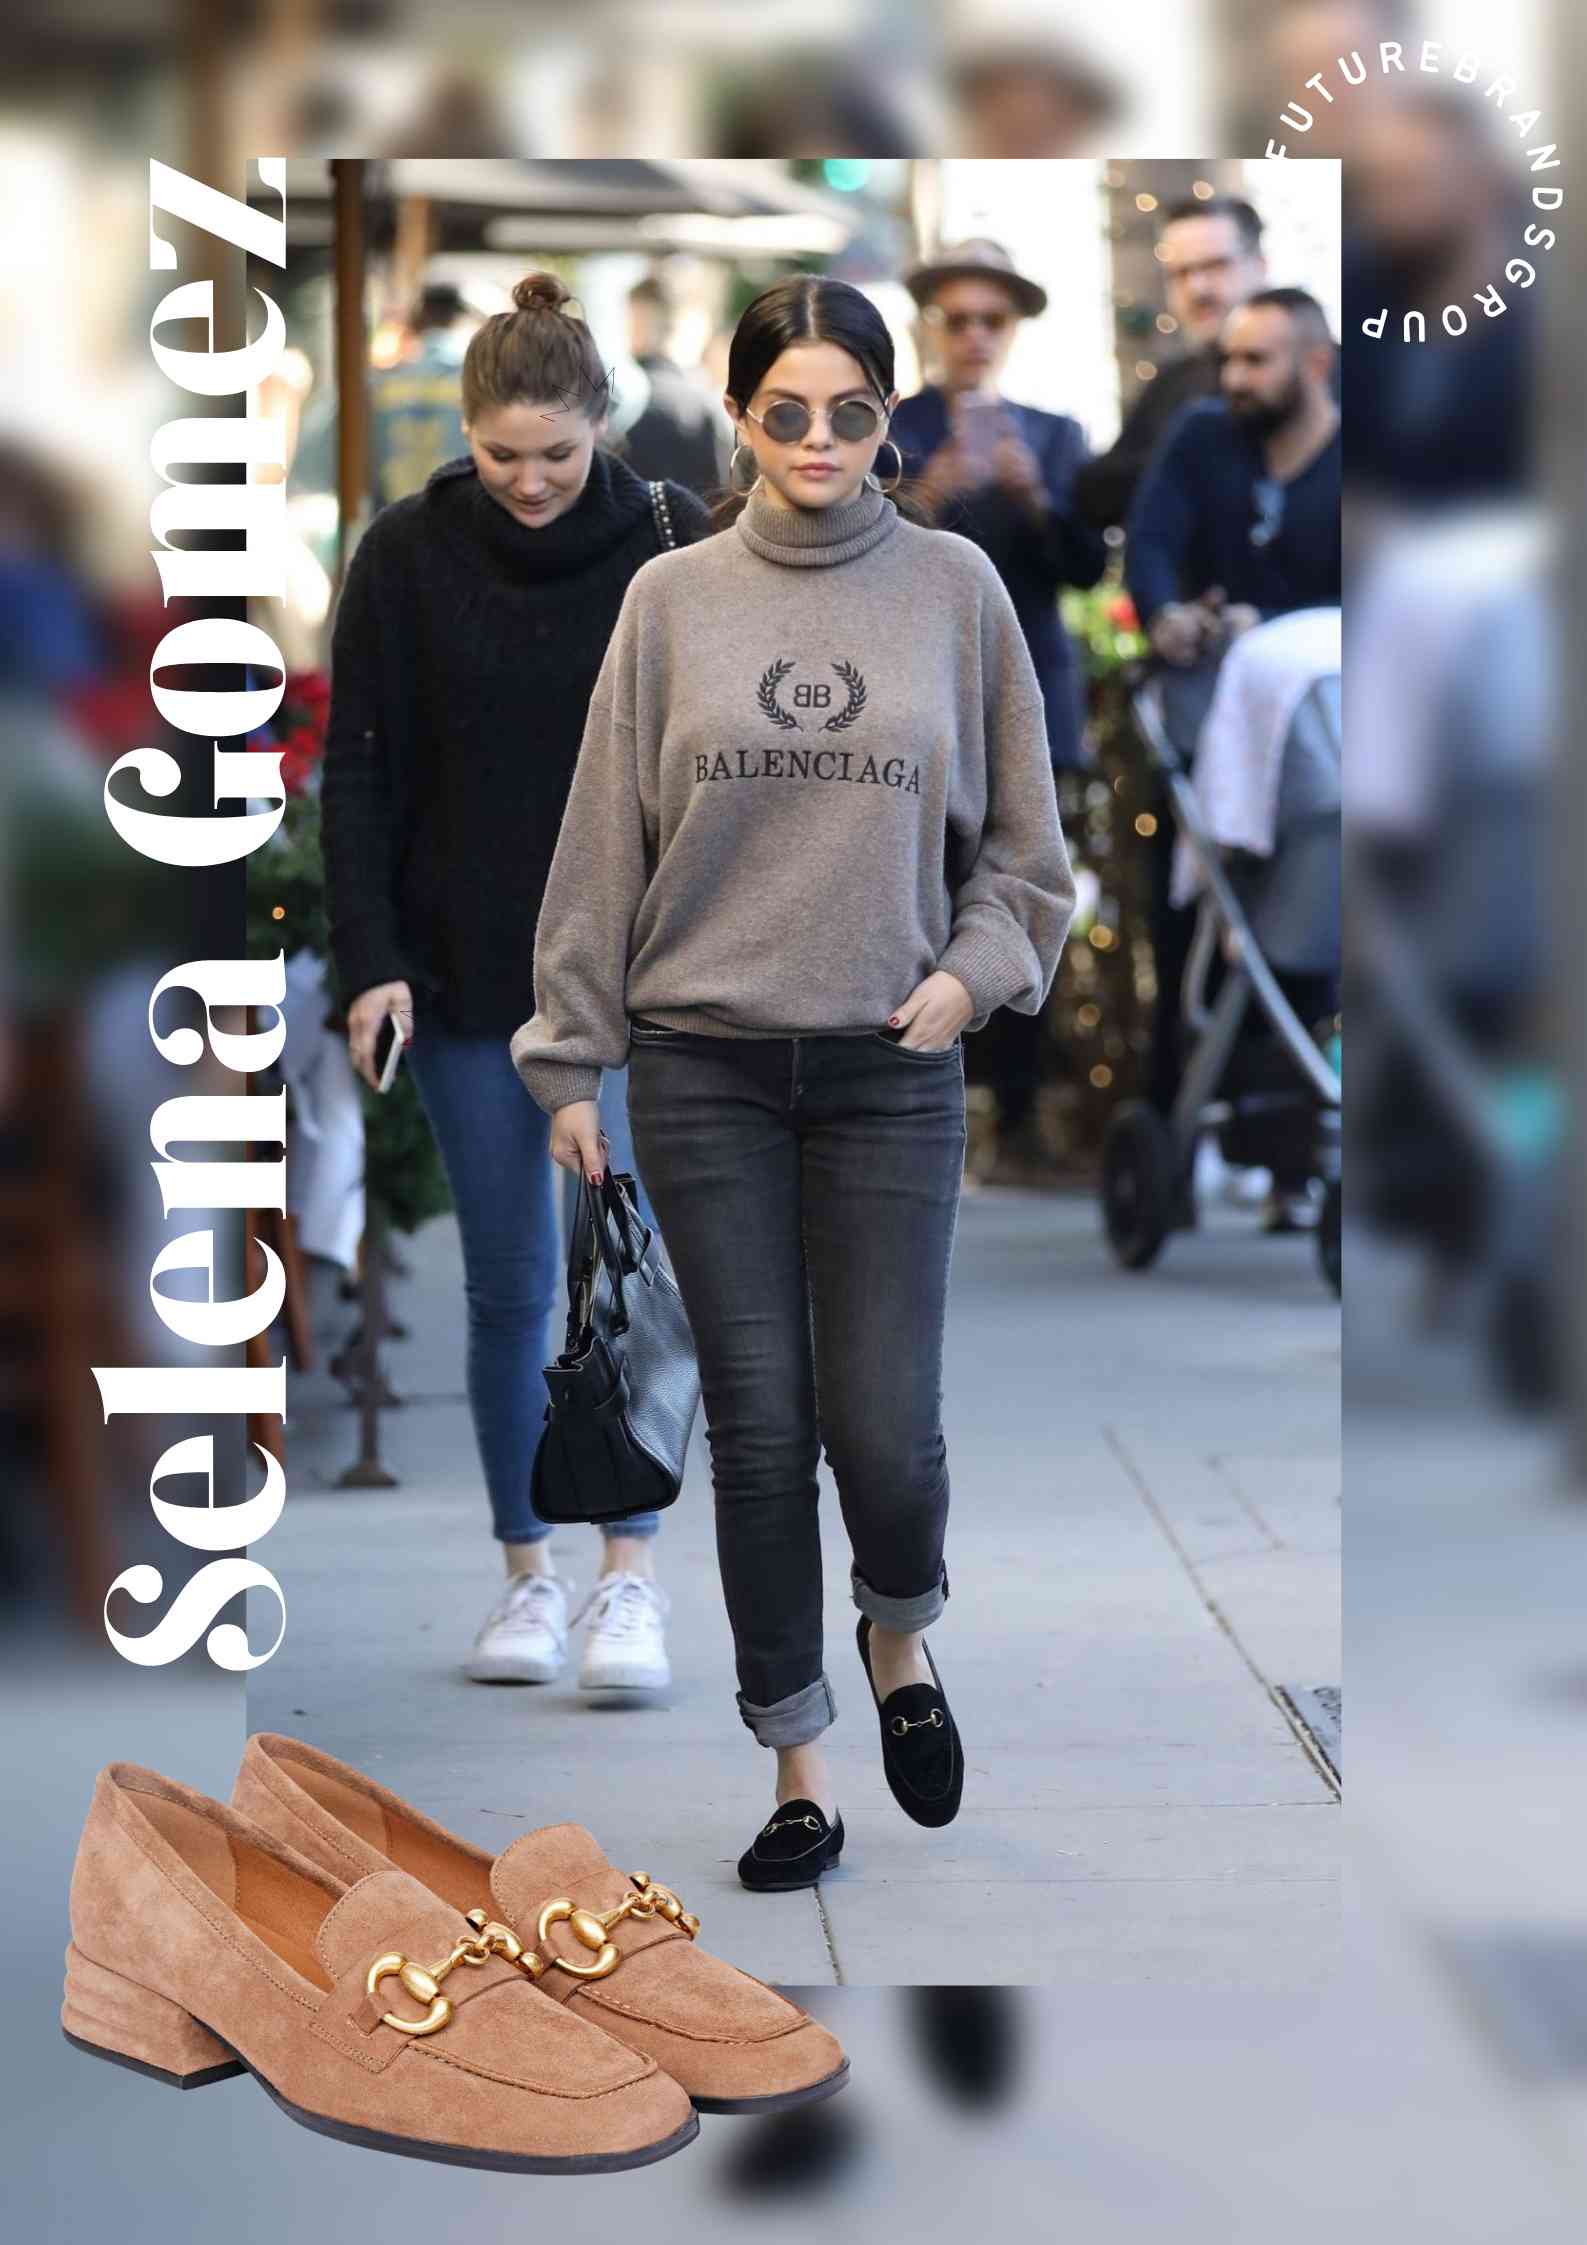 Celebrity Selena Gomez wearing black suede loafers